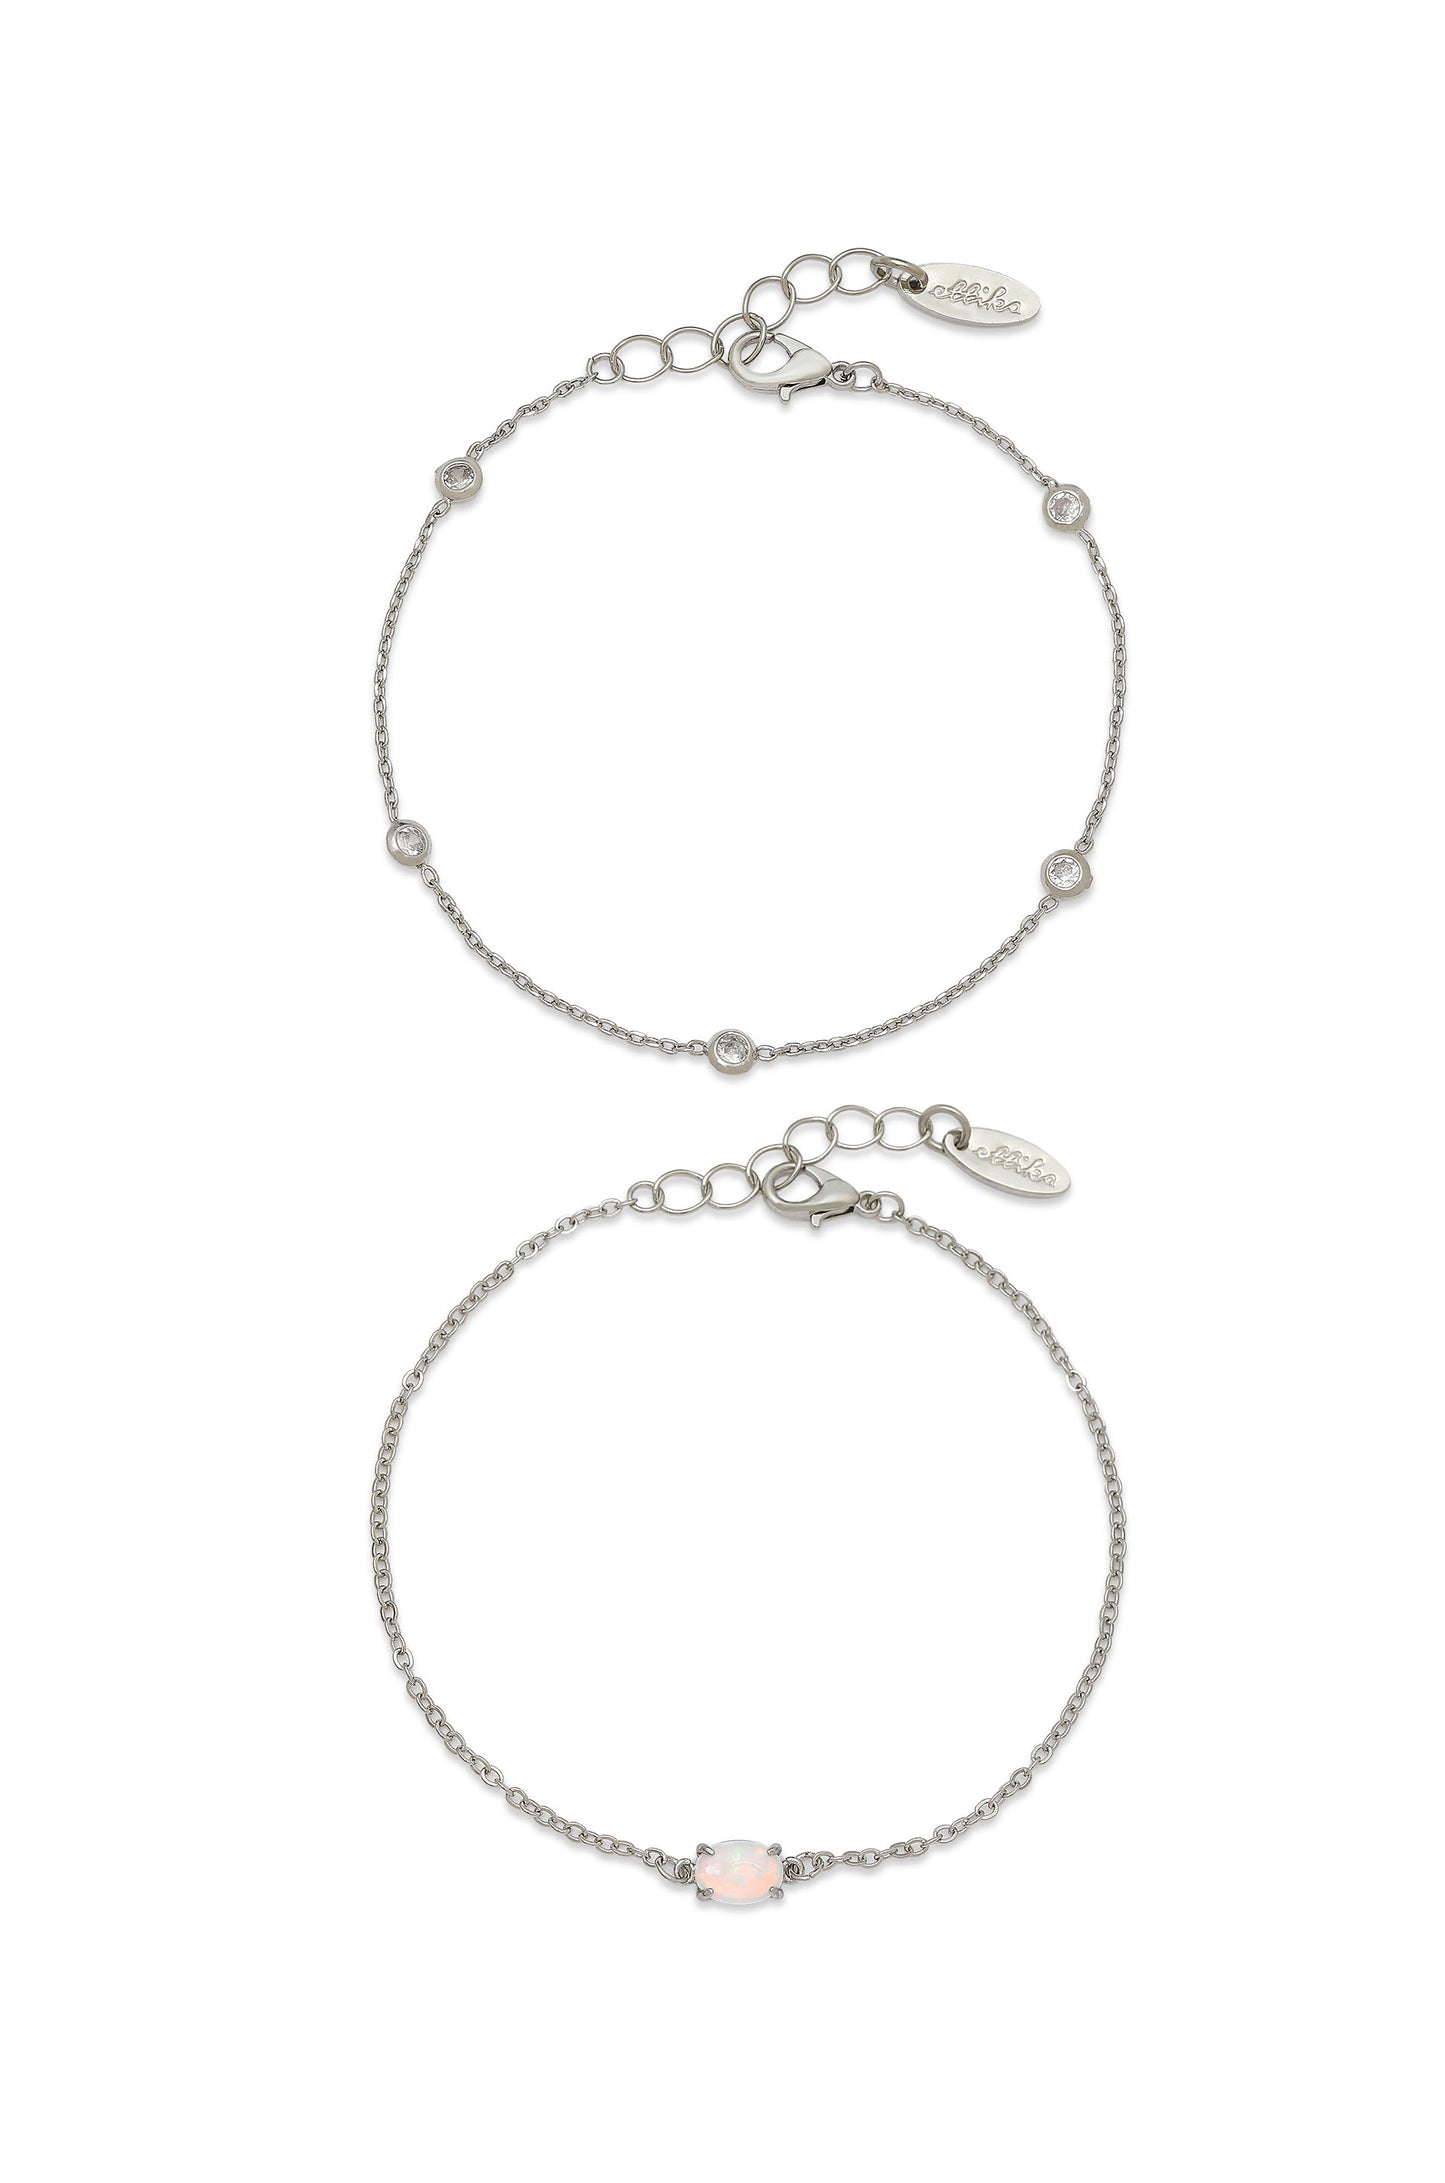 Opal & Crystal Dainty Bracelet Set with Extender Add On in rhodium